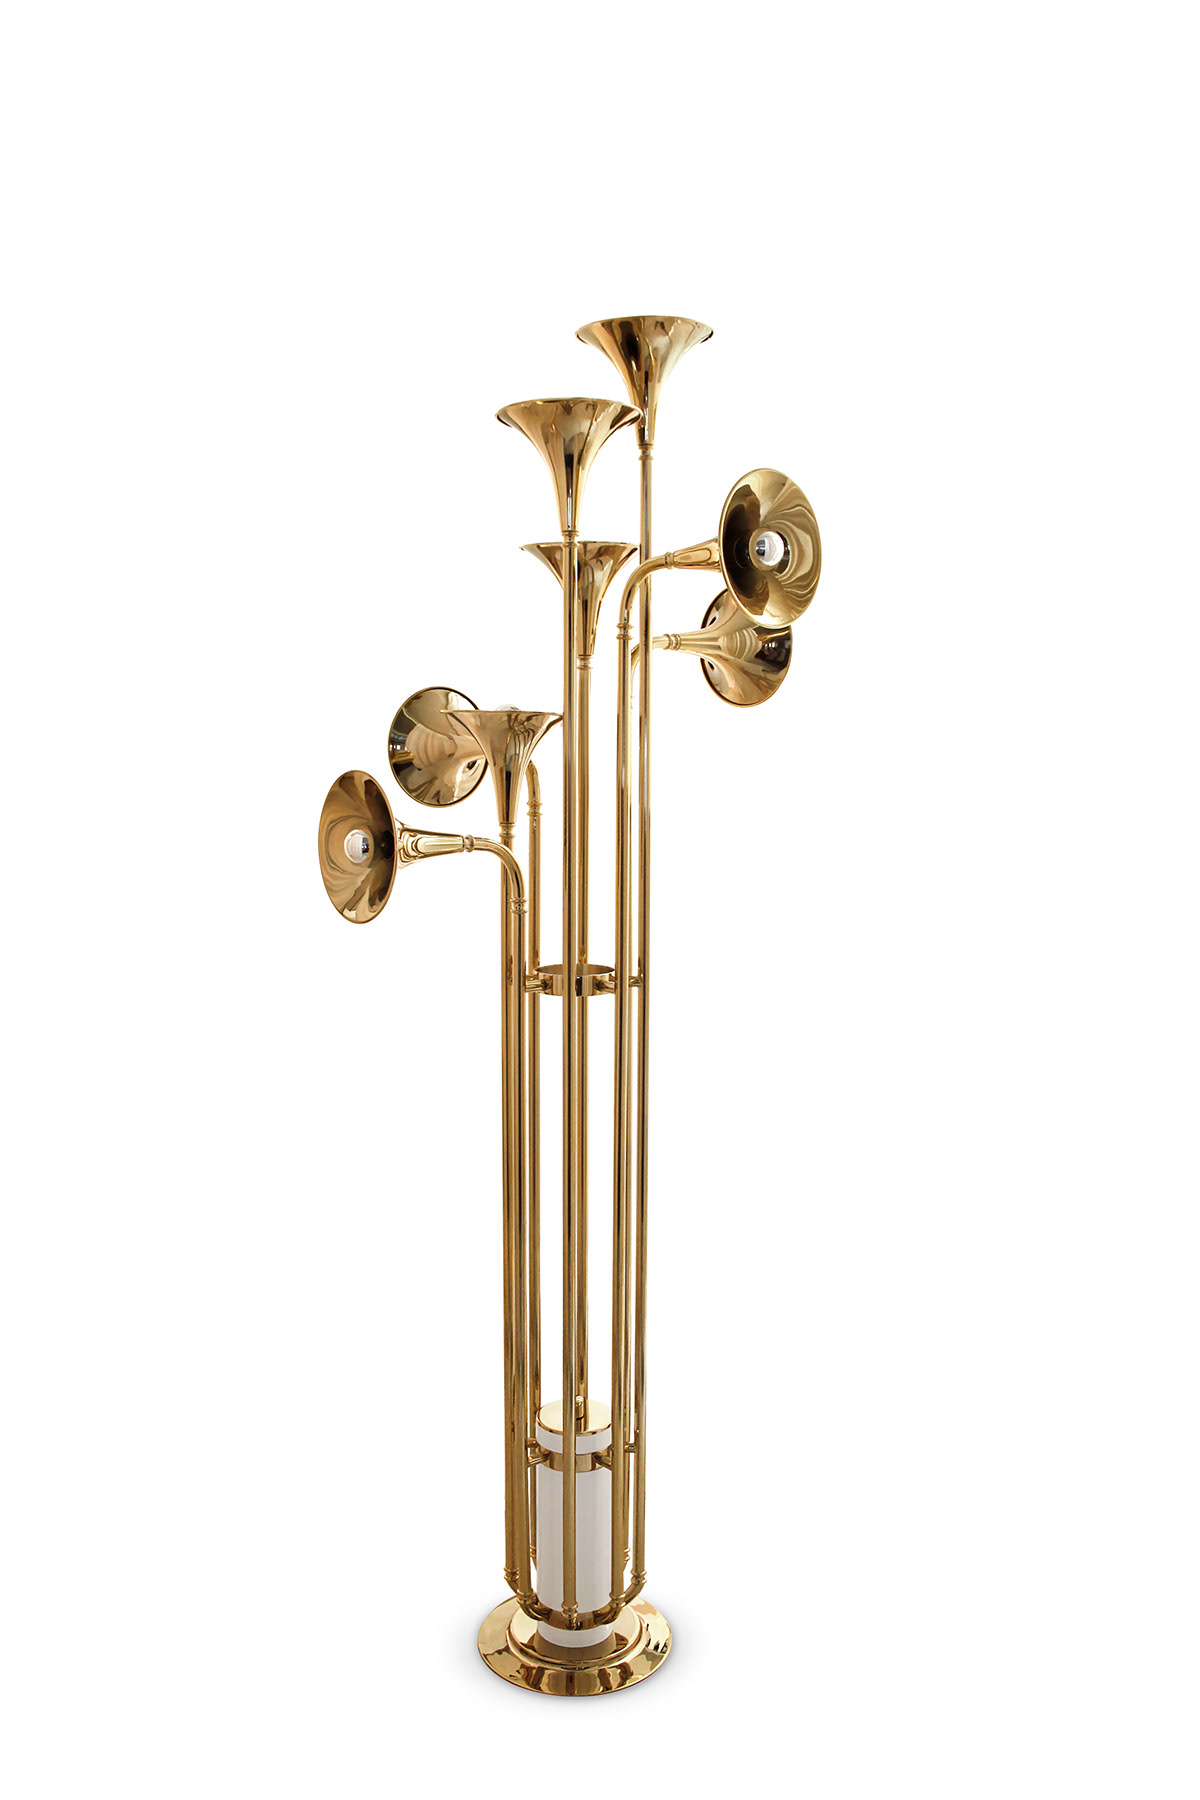 FLOOR Lamp vintage handmade brass lighting floorlamp gold